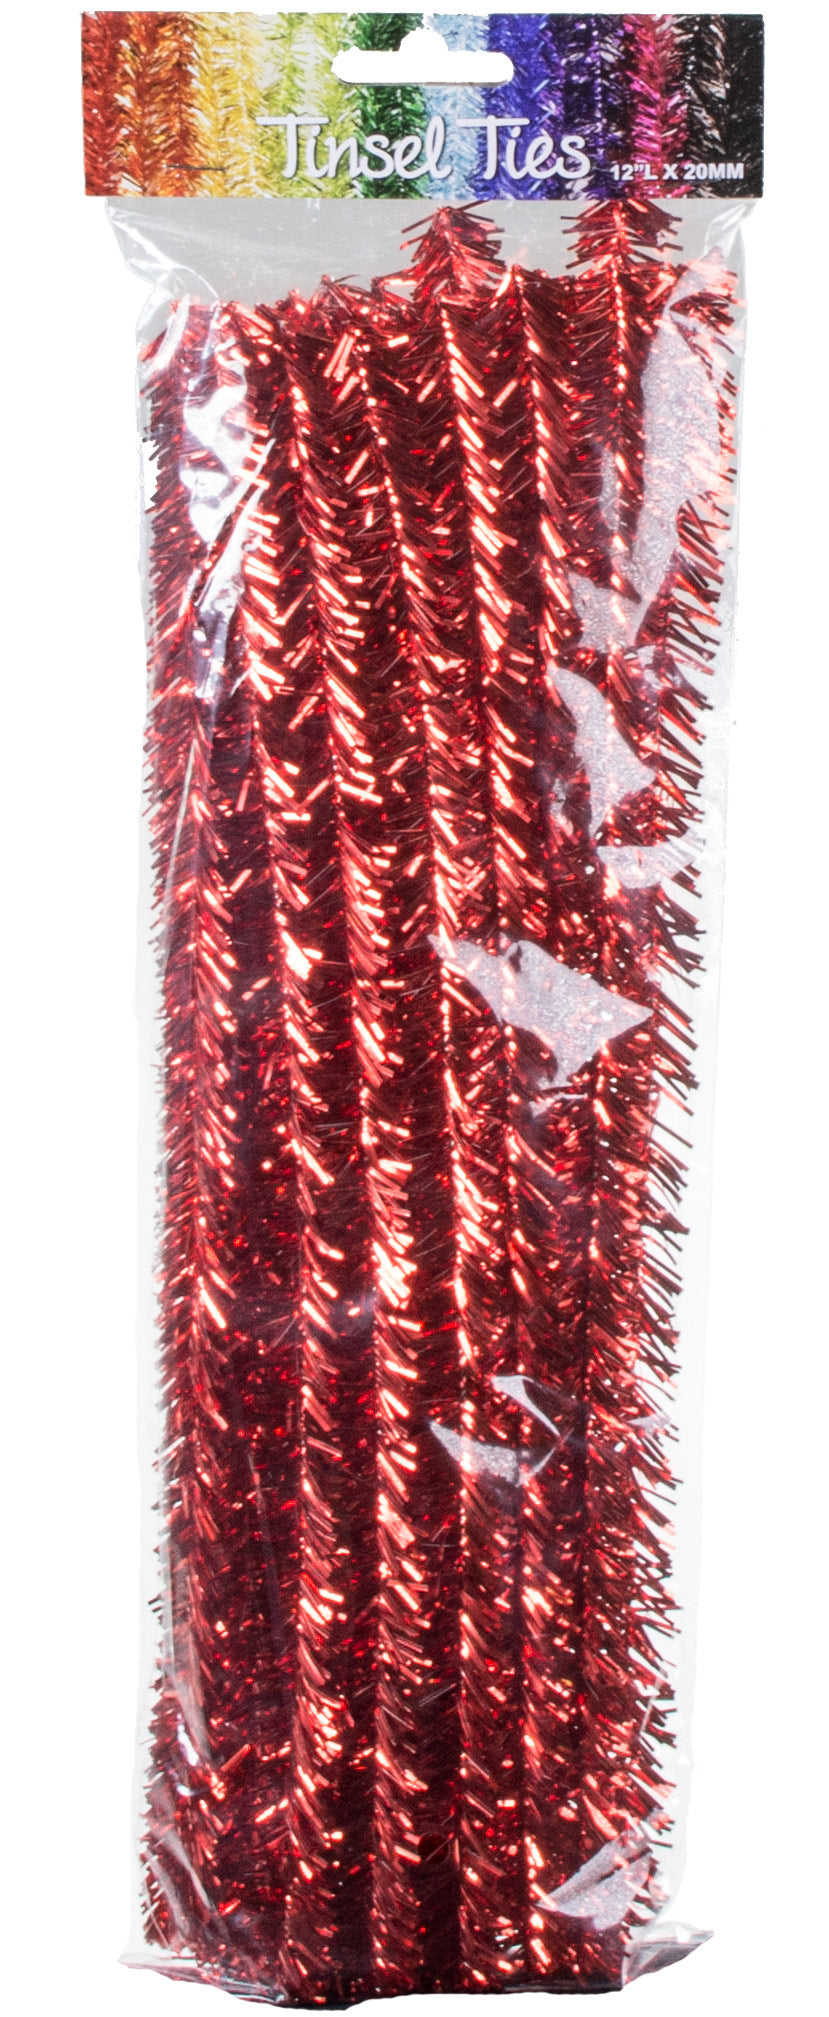 20mm Tinsel Tie Stems: Metallic Red (25)